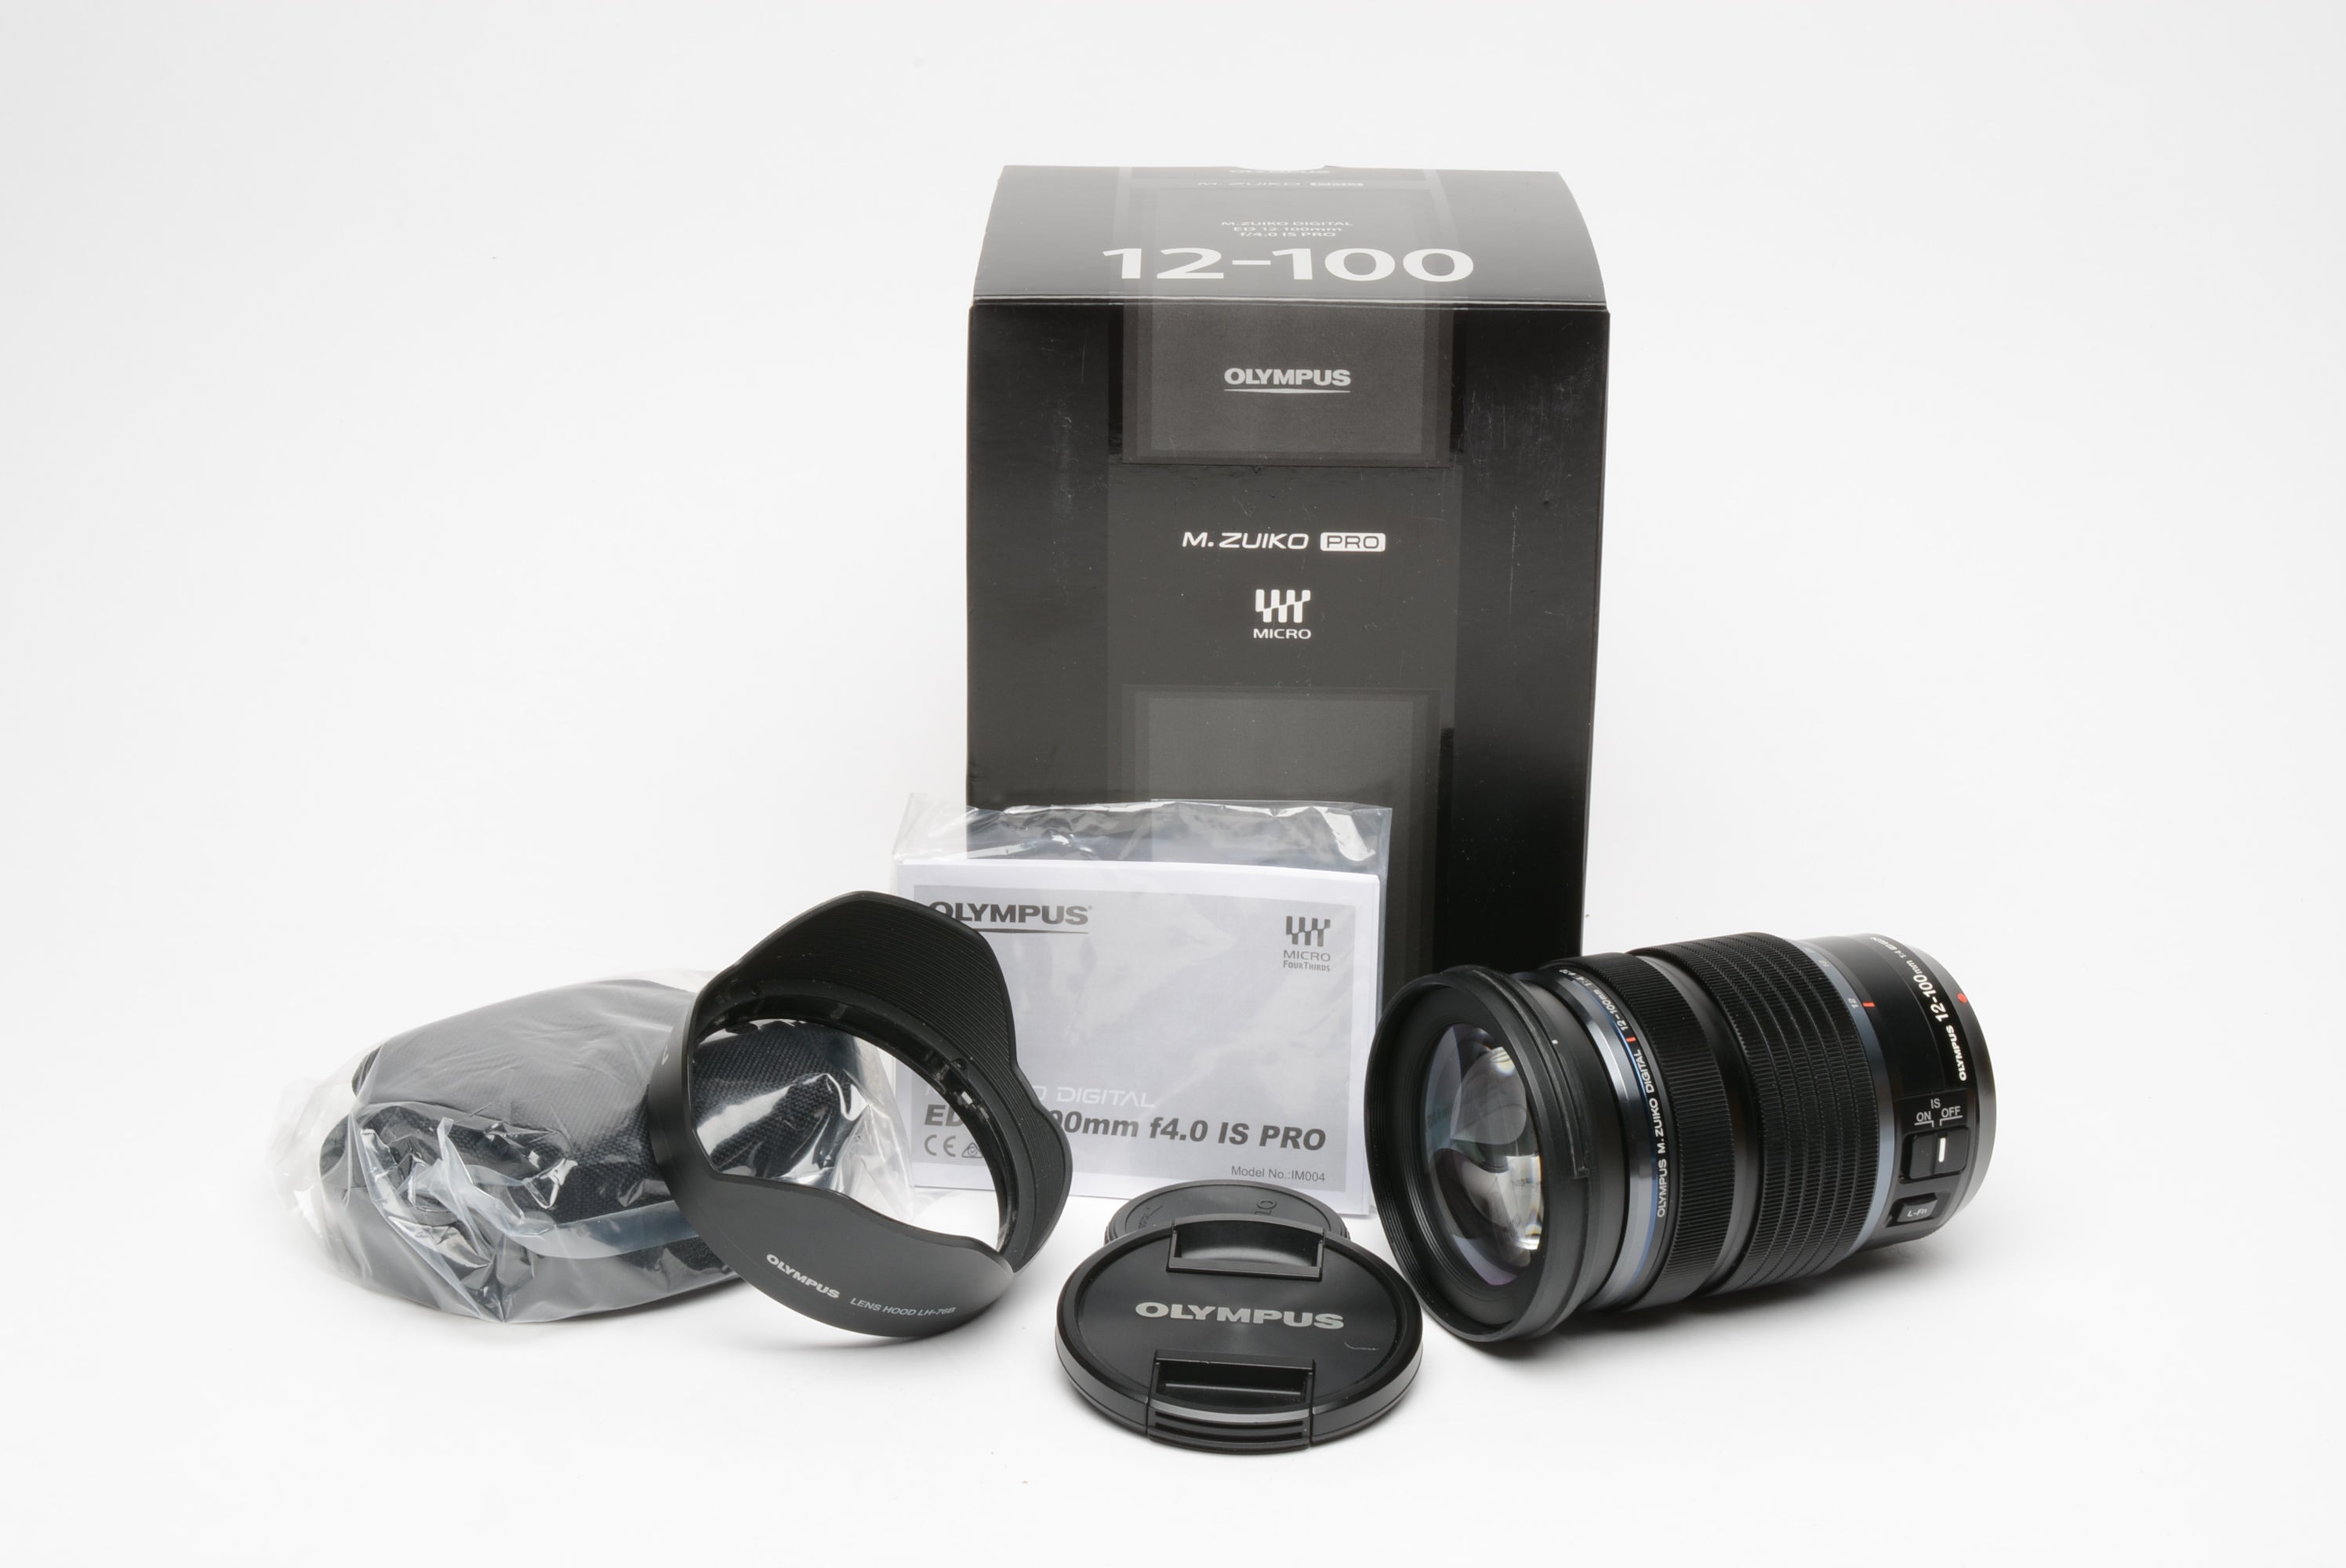 Olympus OM 12-100mm f4 IS Pro M.Zuiko Digital lens, caps, pouch